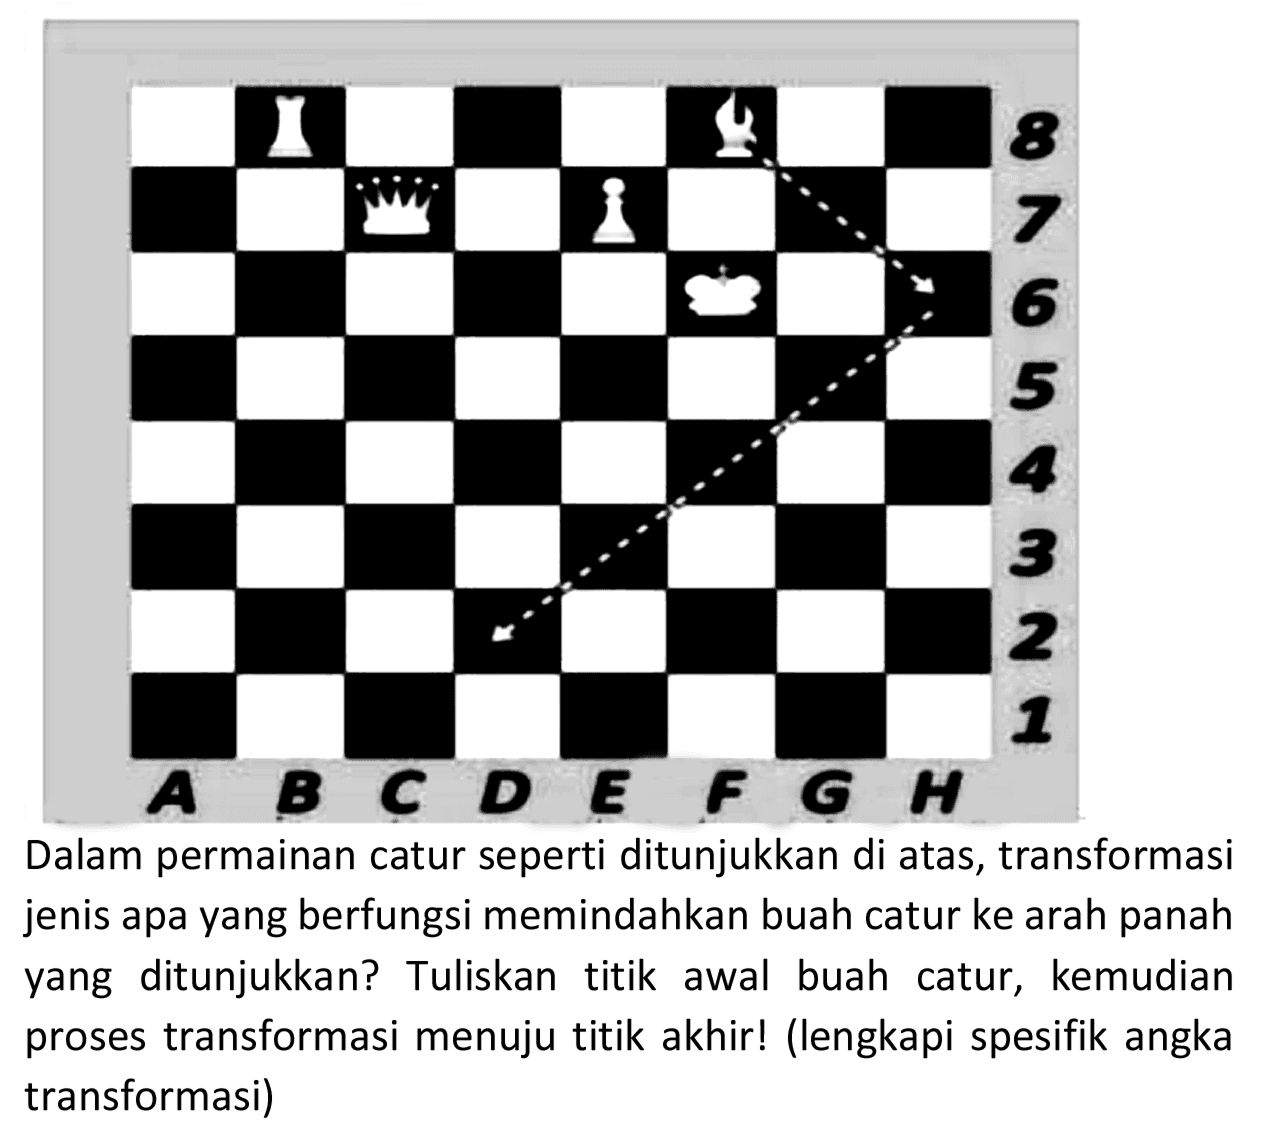 8 7 6 5 4 3 2 1 A B C D E F G H 
Dalam permainan catur seperti ditunjukkan di atas, transformasi jenis apa yang berfungsi memindahkan buah catur ke arah panah yang ditunjukkan? Tuliskan titik awal buah catur, kemudian proses transformasi menuju titik akhir! (lengkapi spesifik angka transformasi)